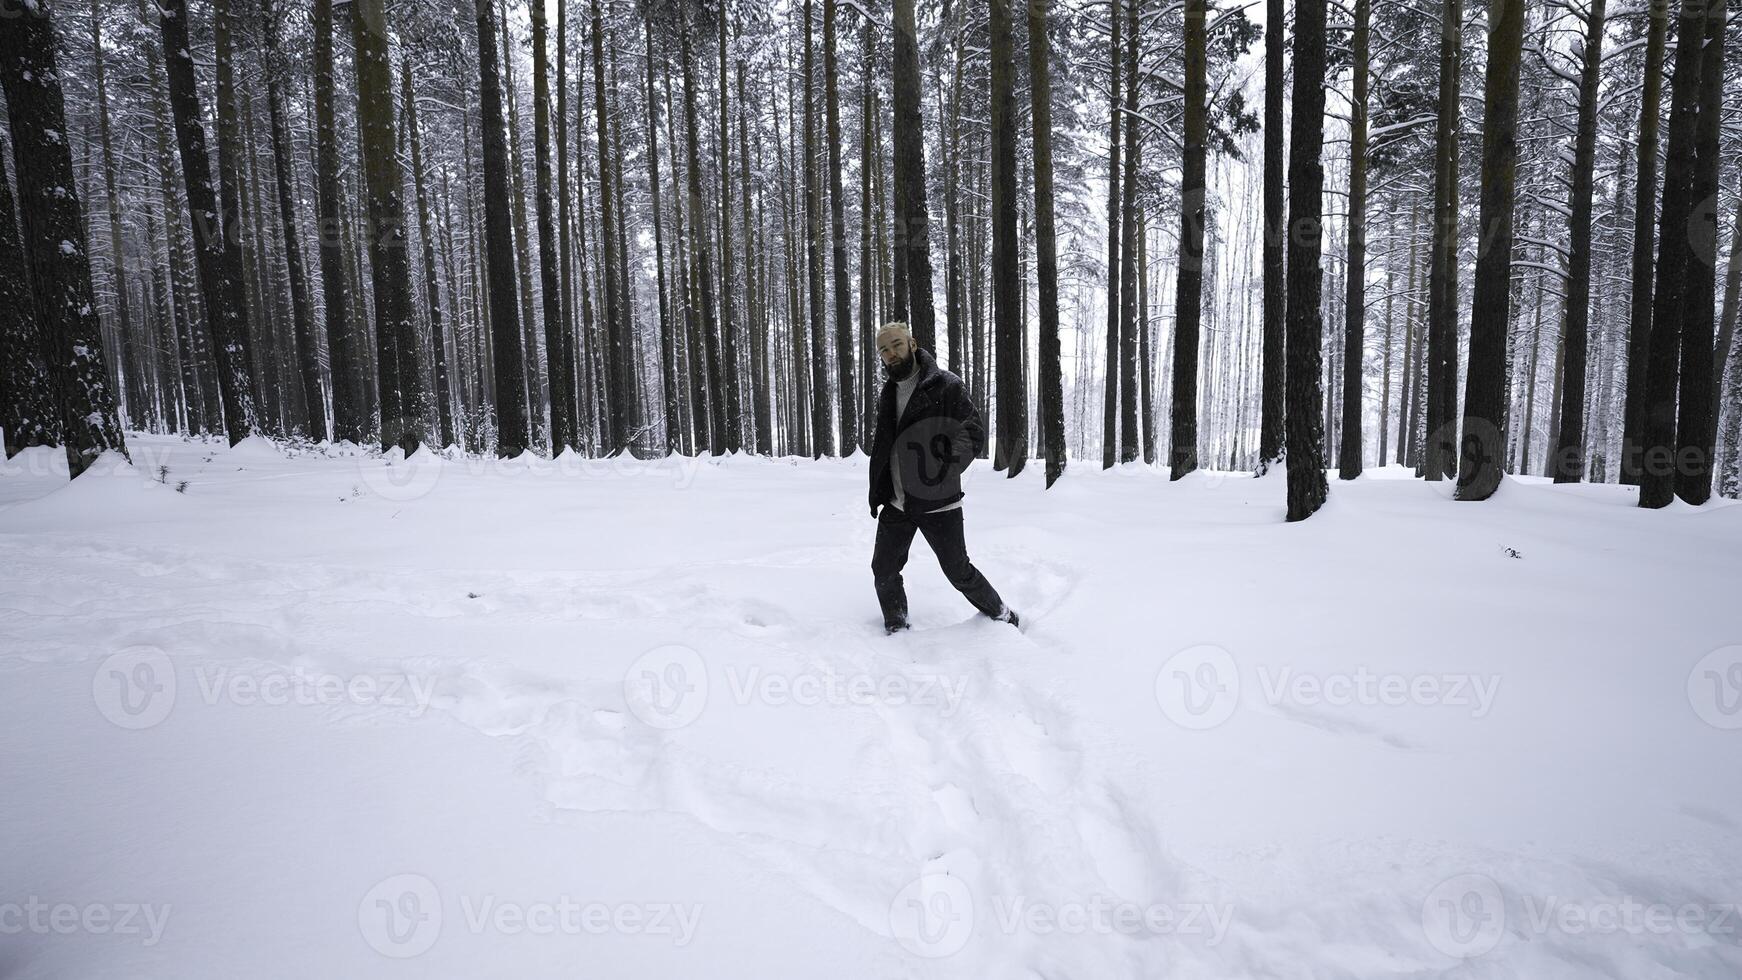 hombre camina elegantemente en invierno bosque. medios de comunicación. de moda Disparo de elegante hombre caminando en invierno bosque. invierno Moda disparo en bosque foto